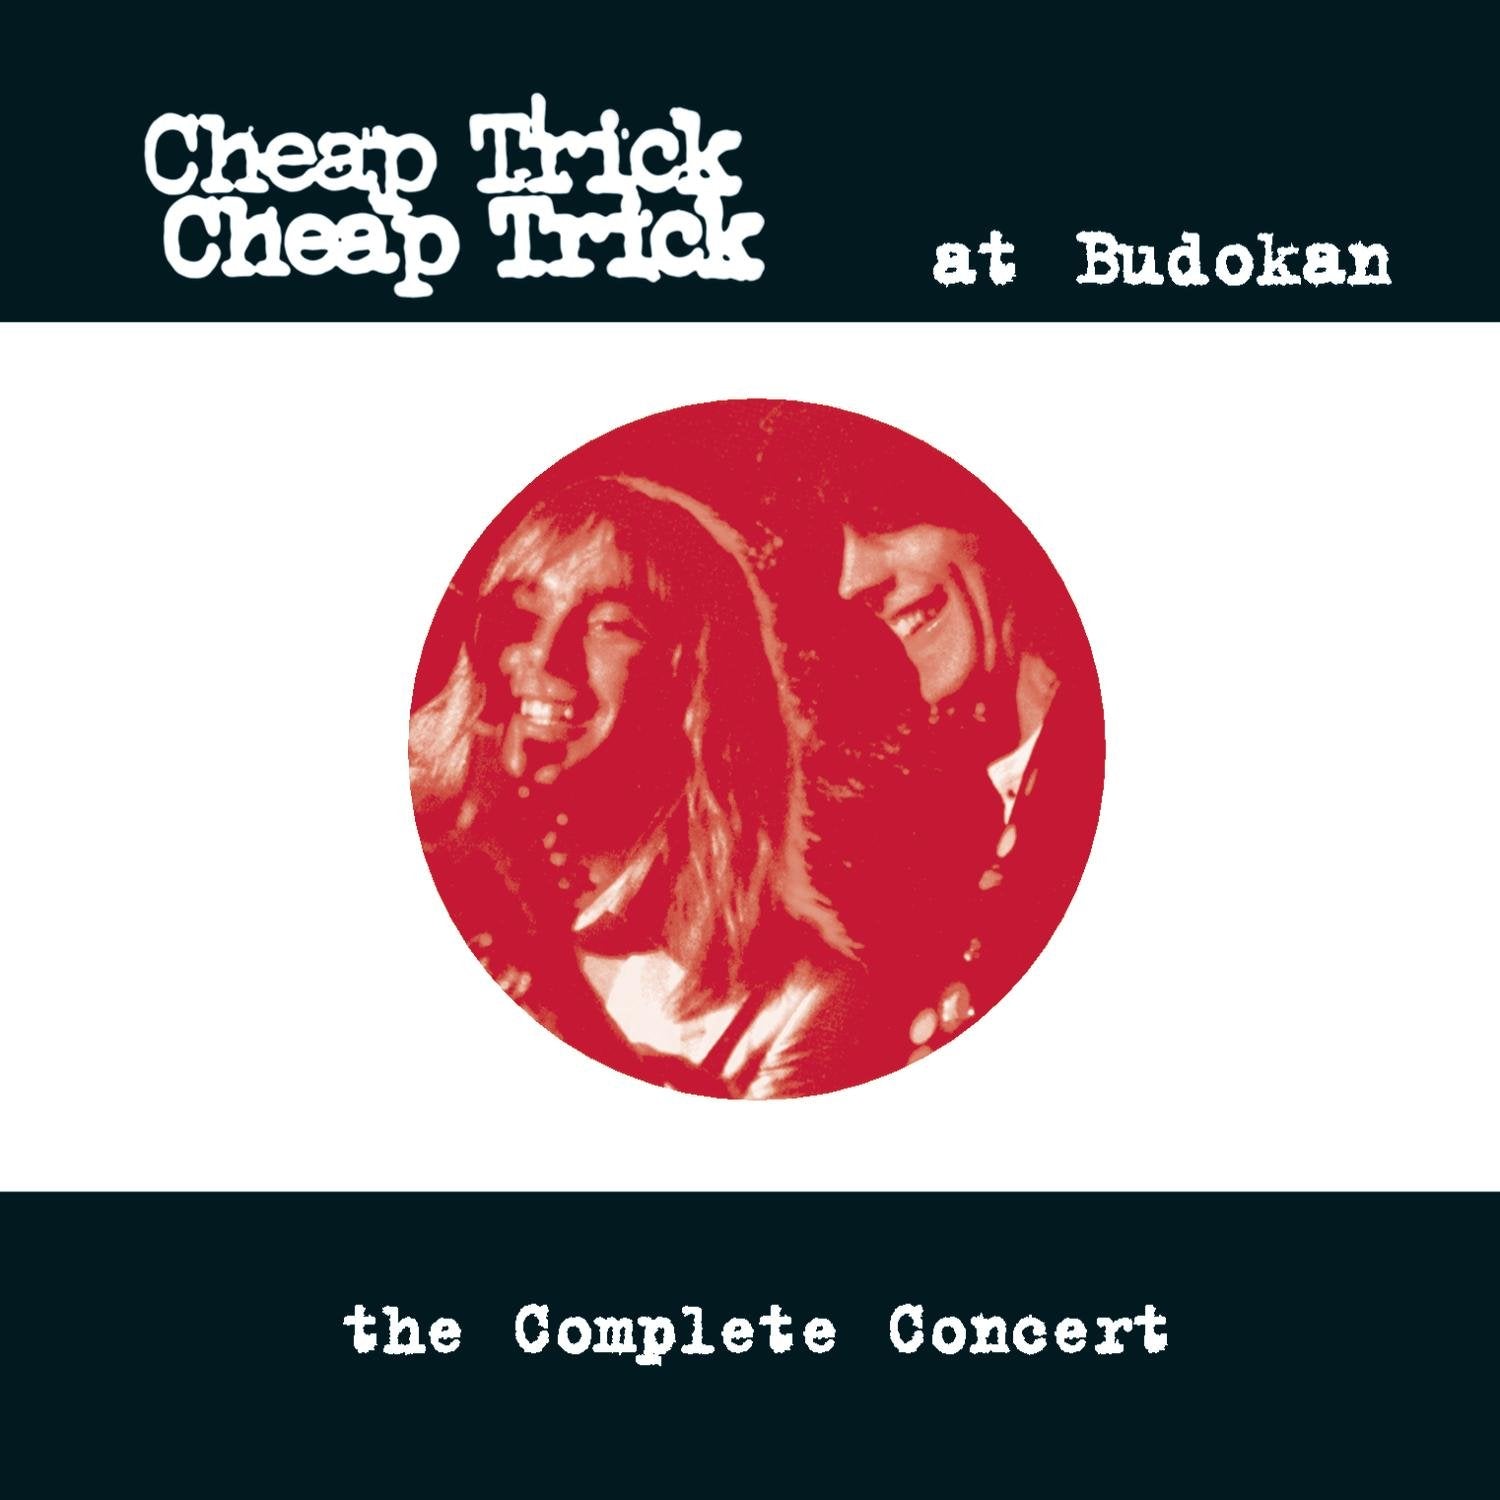 Cheap Trick - At Budokan..  |  Vinyl LP | Cheap Trick - At Budokan (Complete)  (2 LPs) | Records on Vinyl